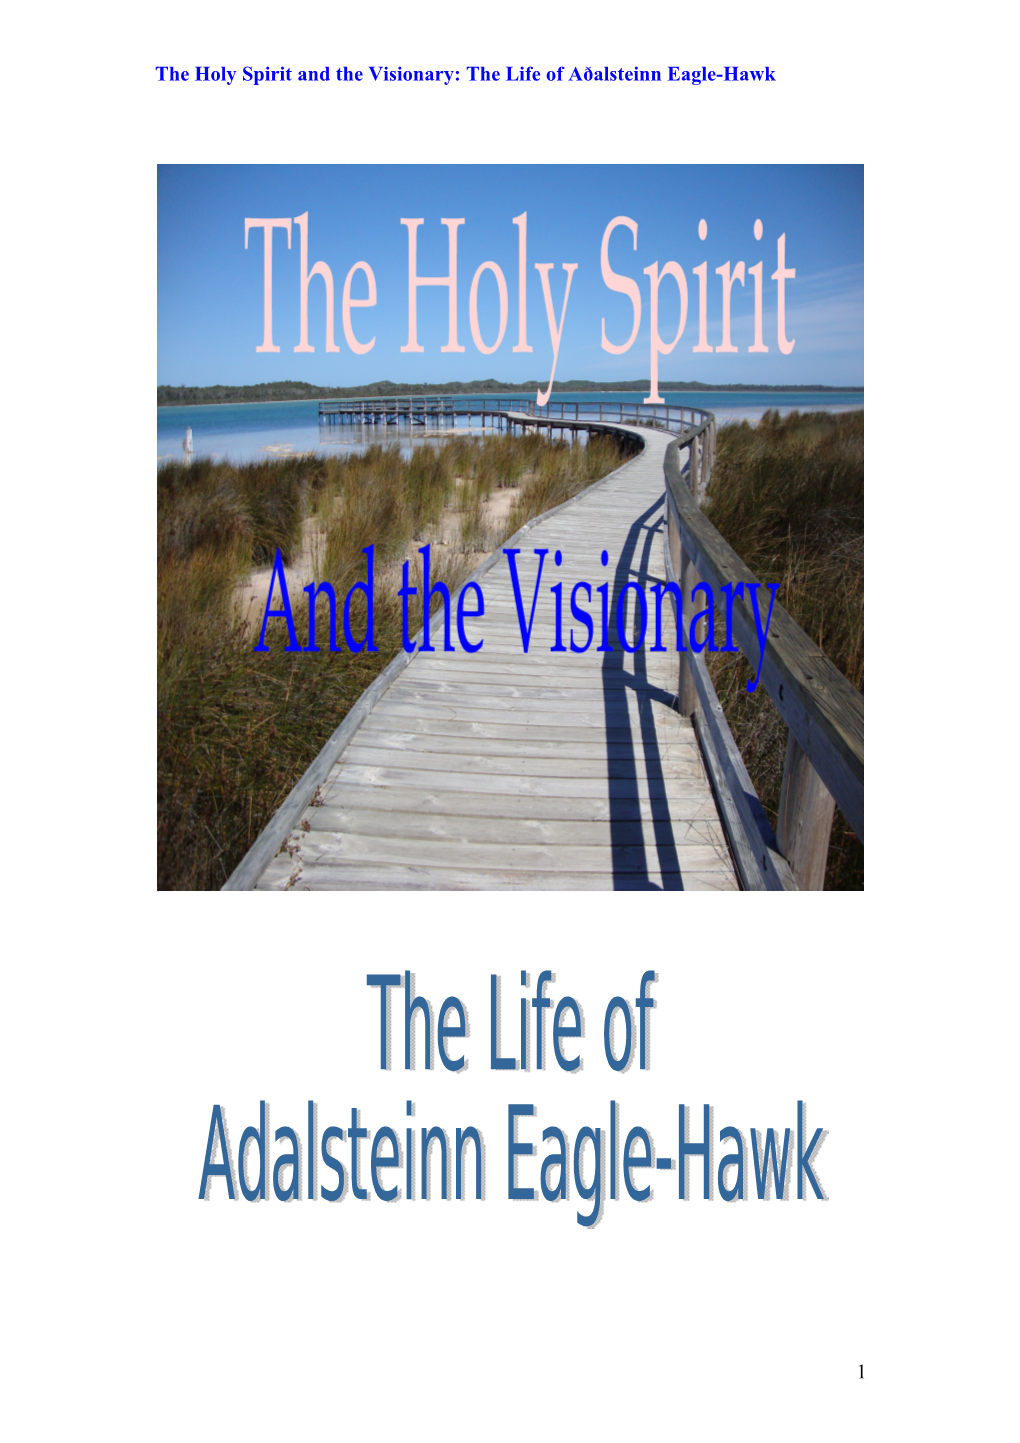 Testimony of Aðalsteinn Eagle-Hawk